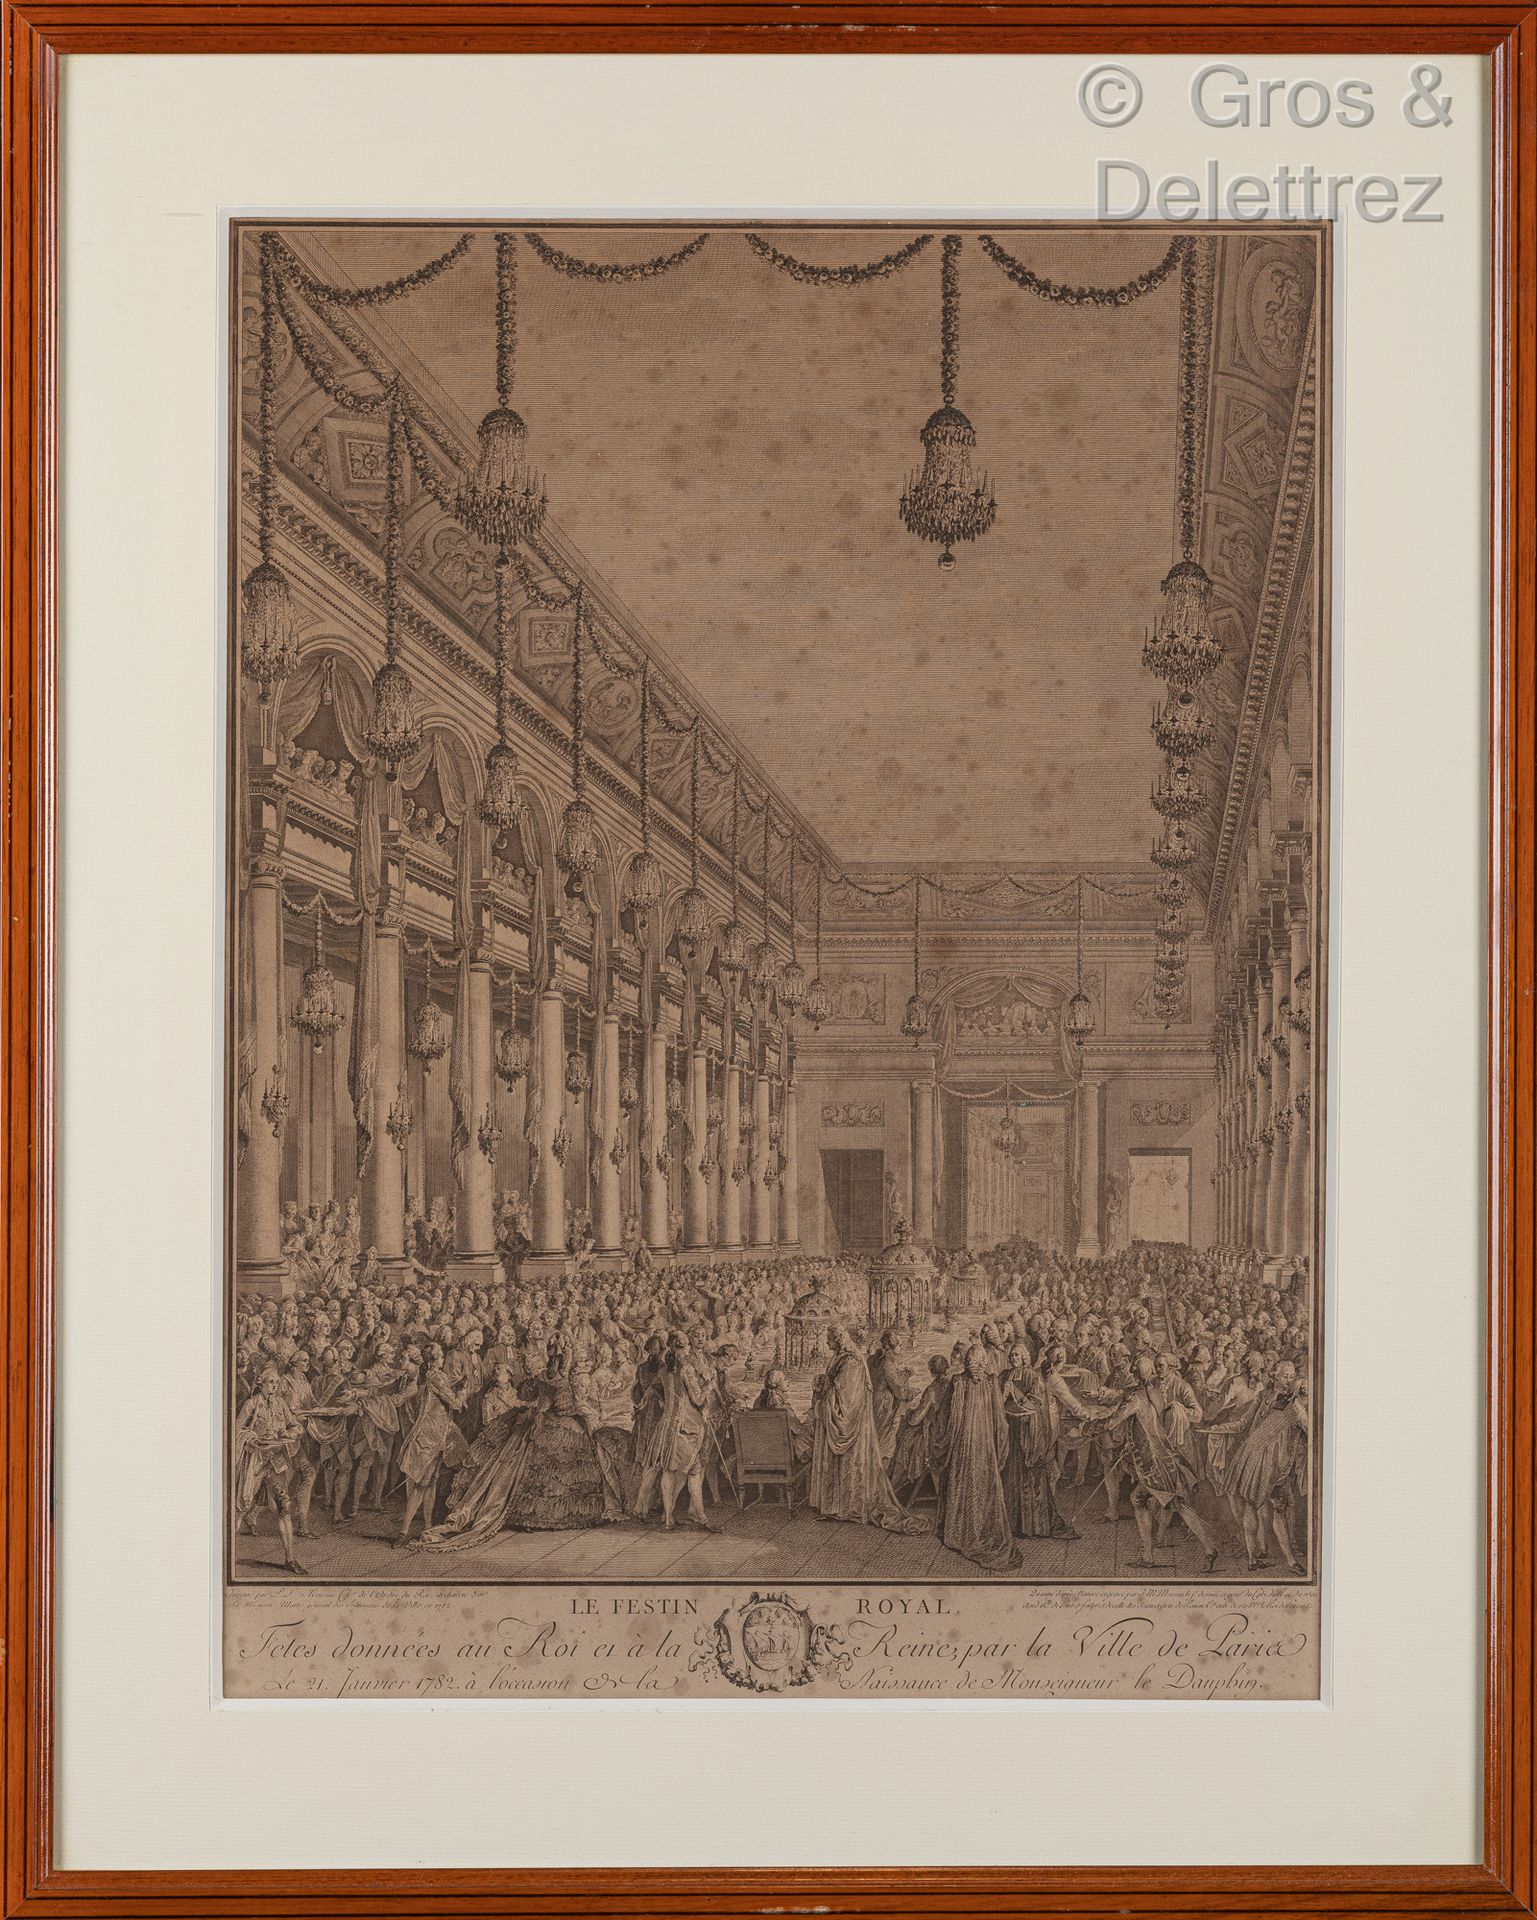 Null 皇家盛宴和假面舞会

一套两幅版画

18世纪晚期

50 x 37厘米